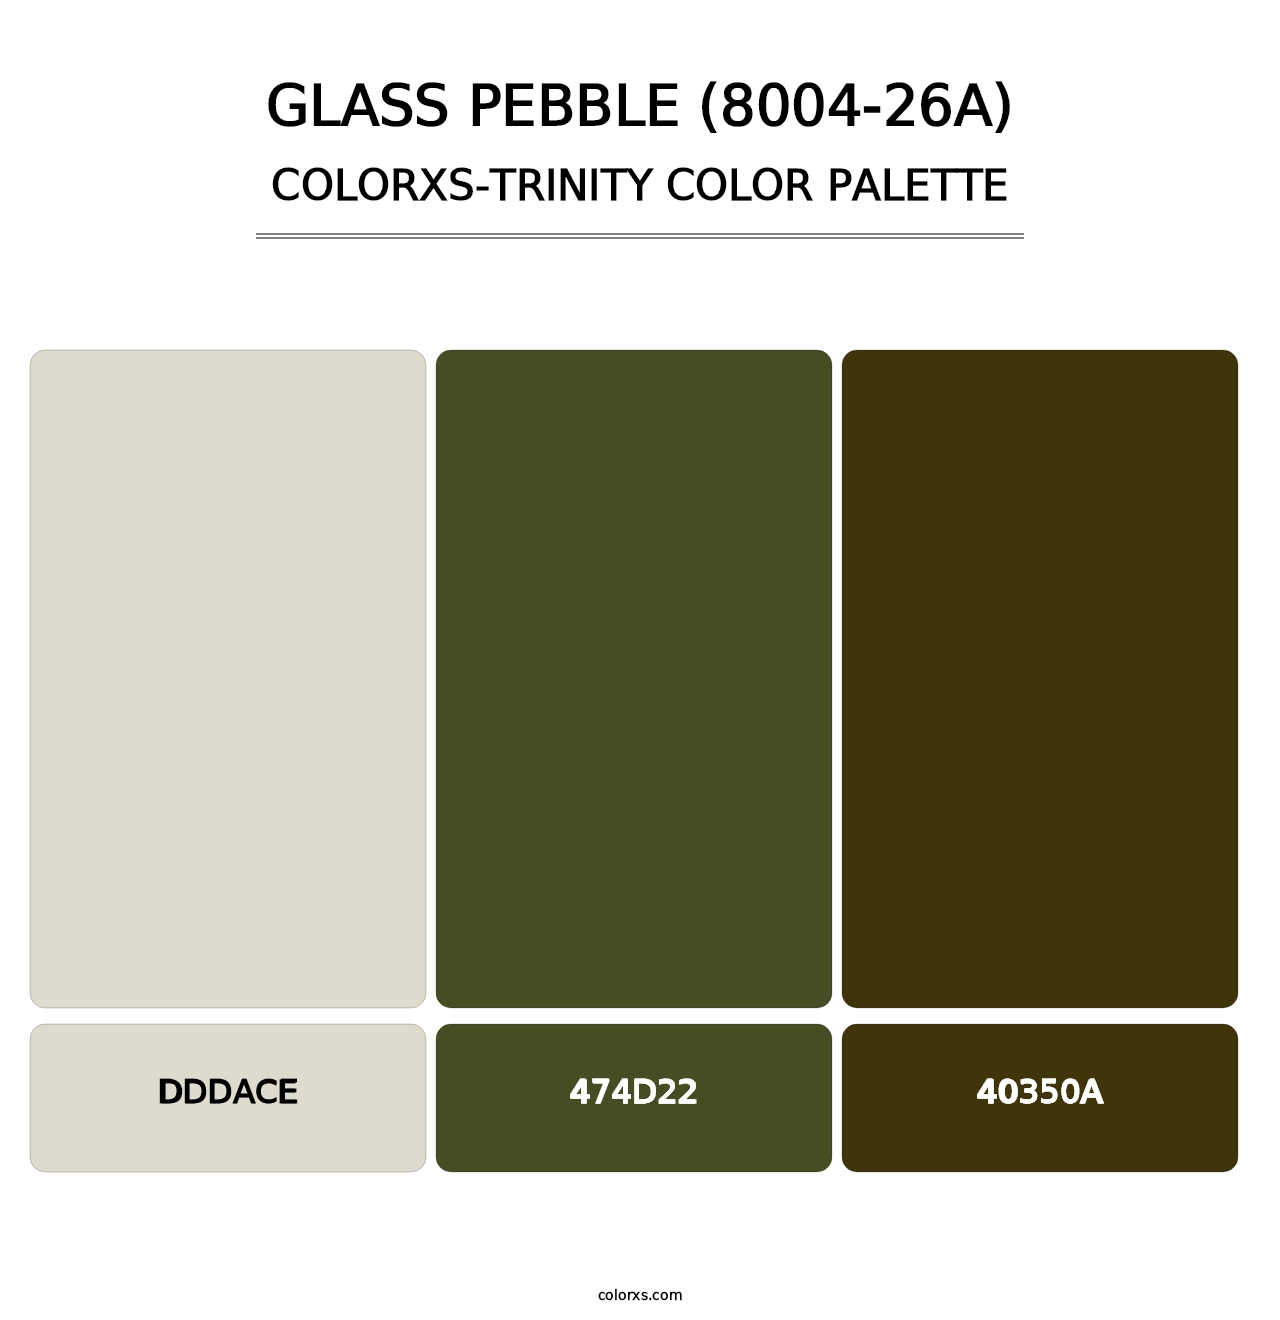 Glass Pebble (8004-26A) - Colorxs Trinity Palette